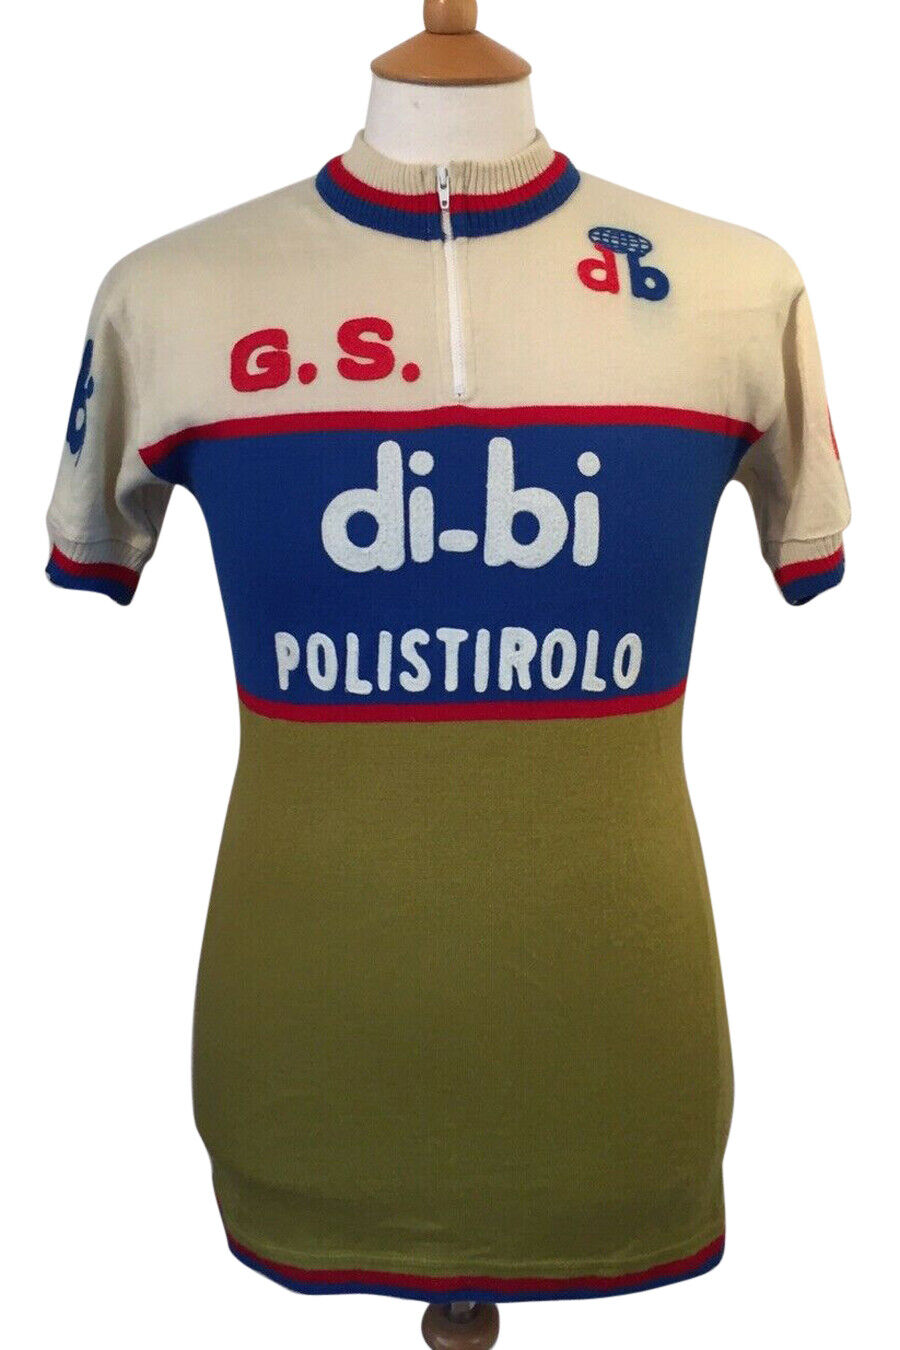 Di-Bi Polistirolo Cycling Jersey, 1970's / 1980's (Pre-Owned) S.